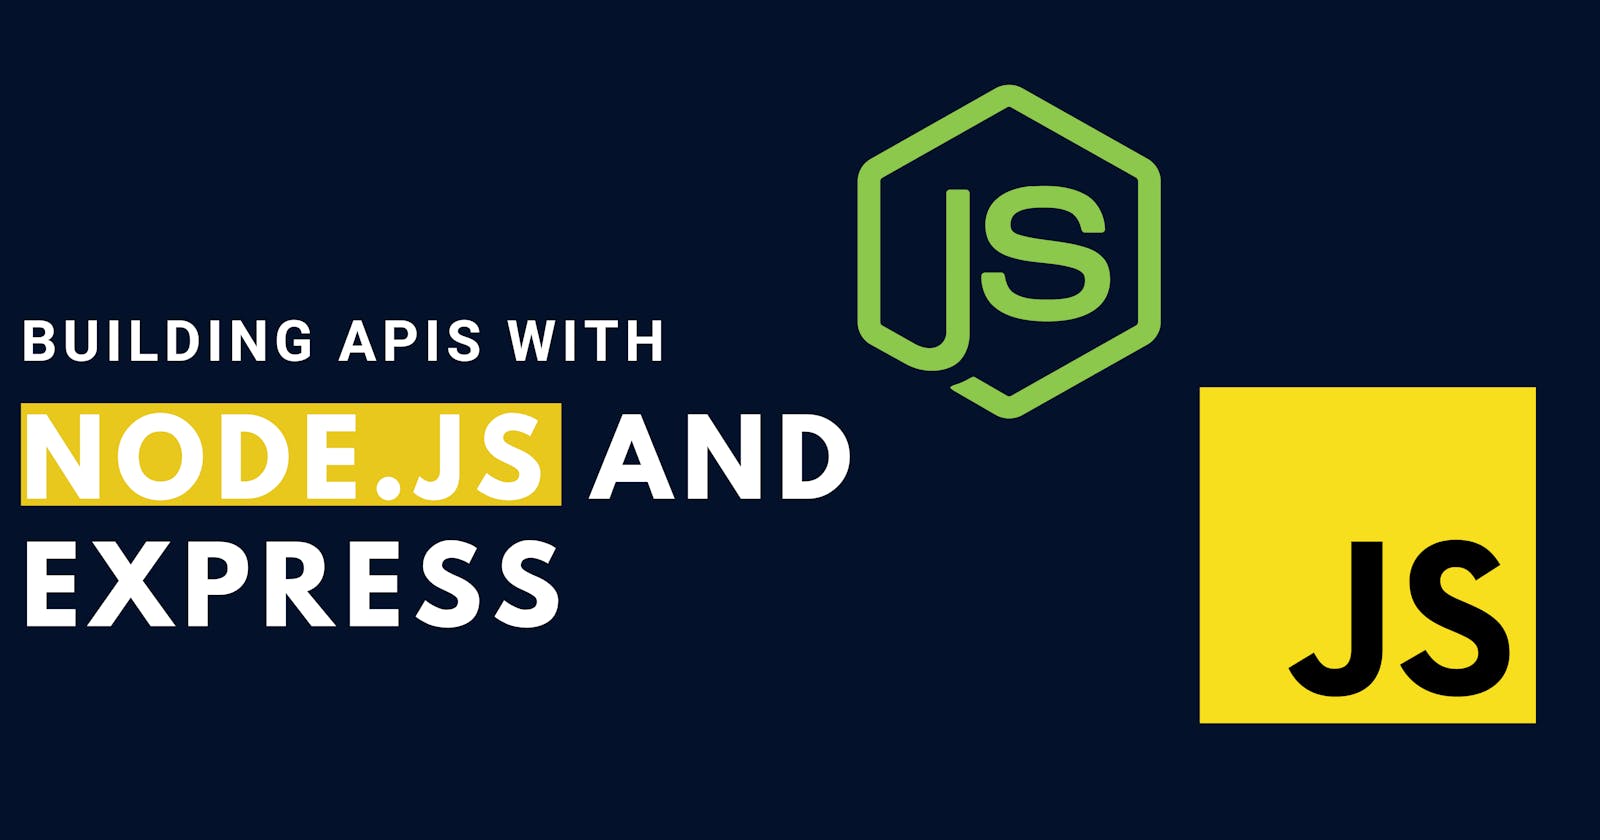 Building APIs with Node.js and Express